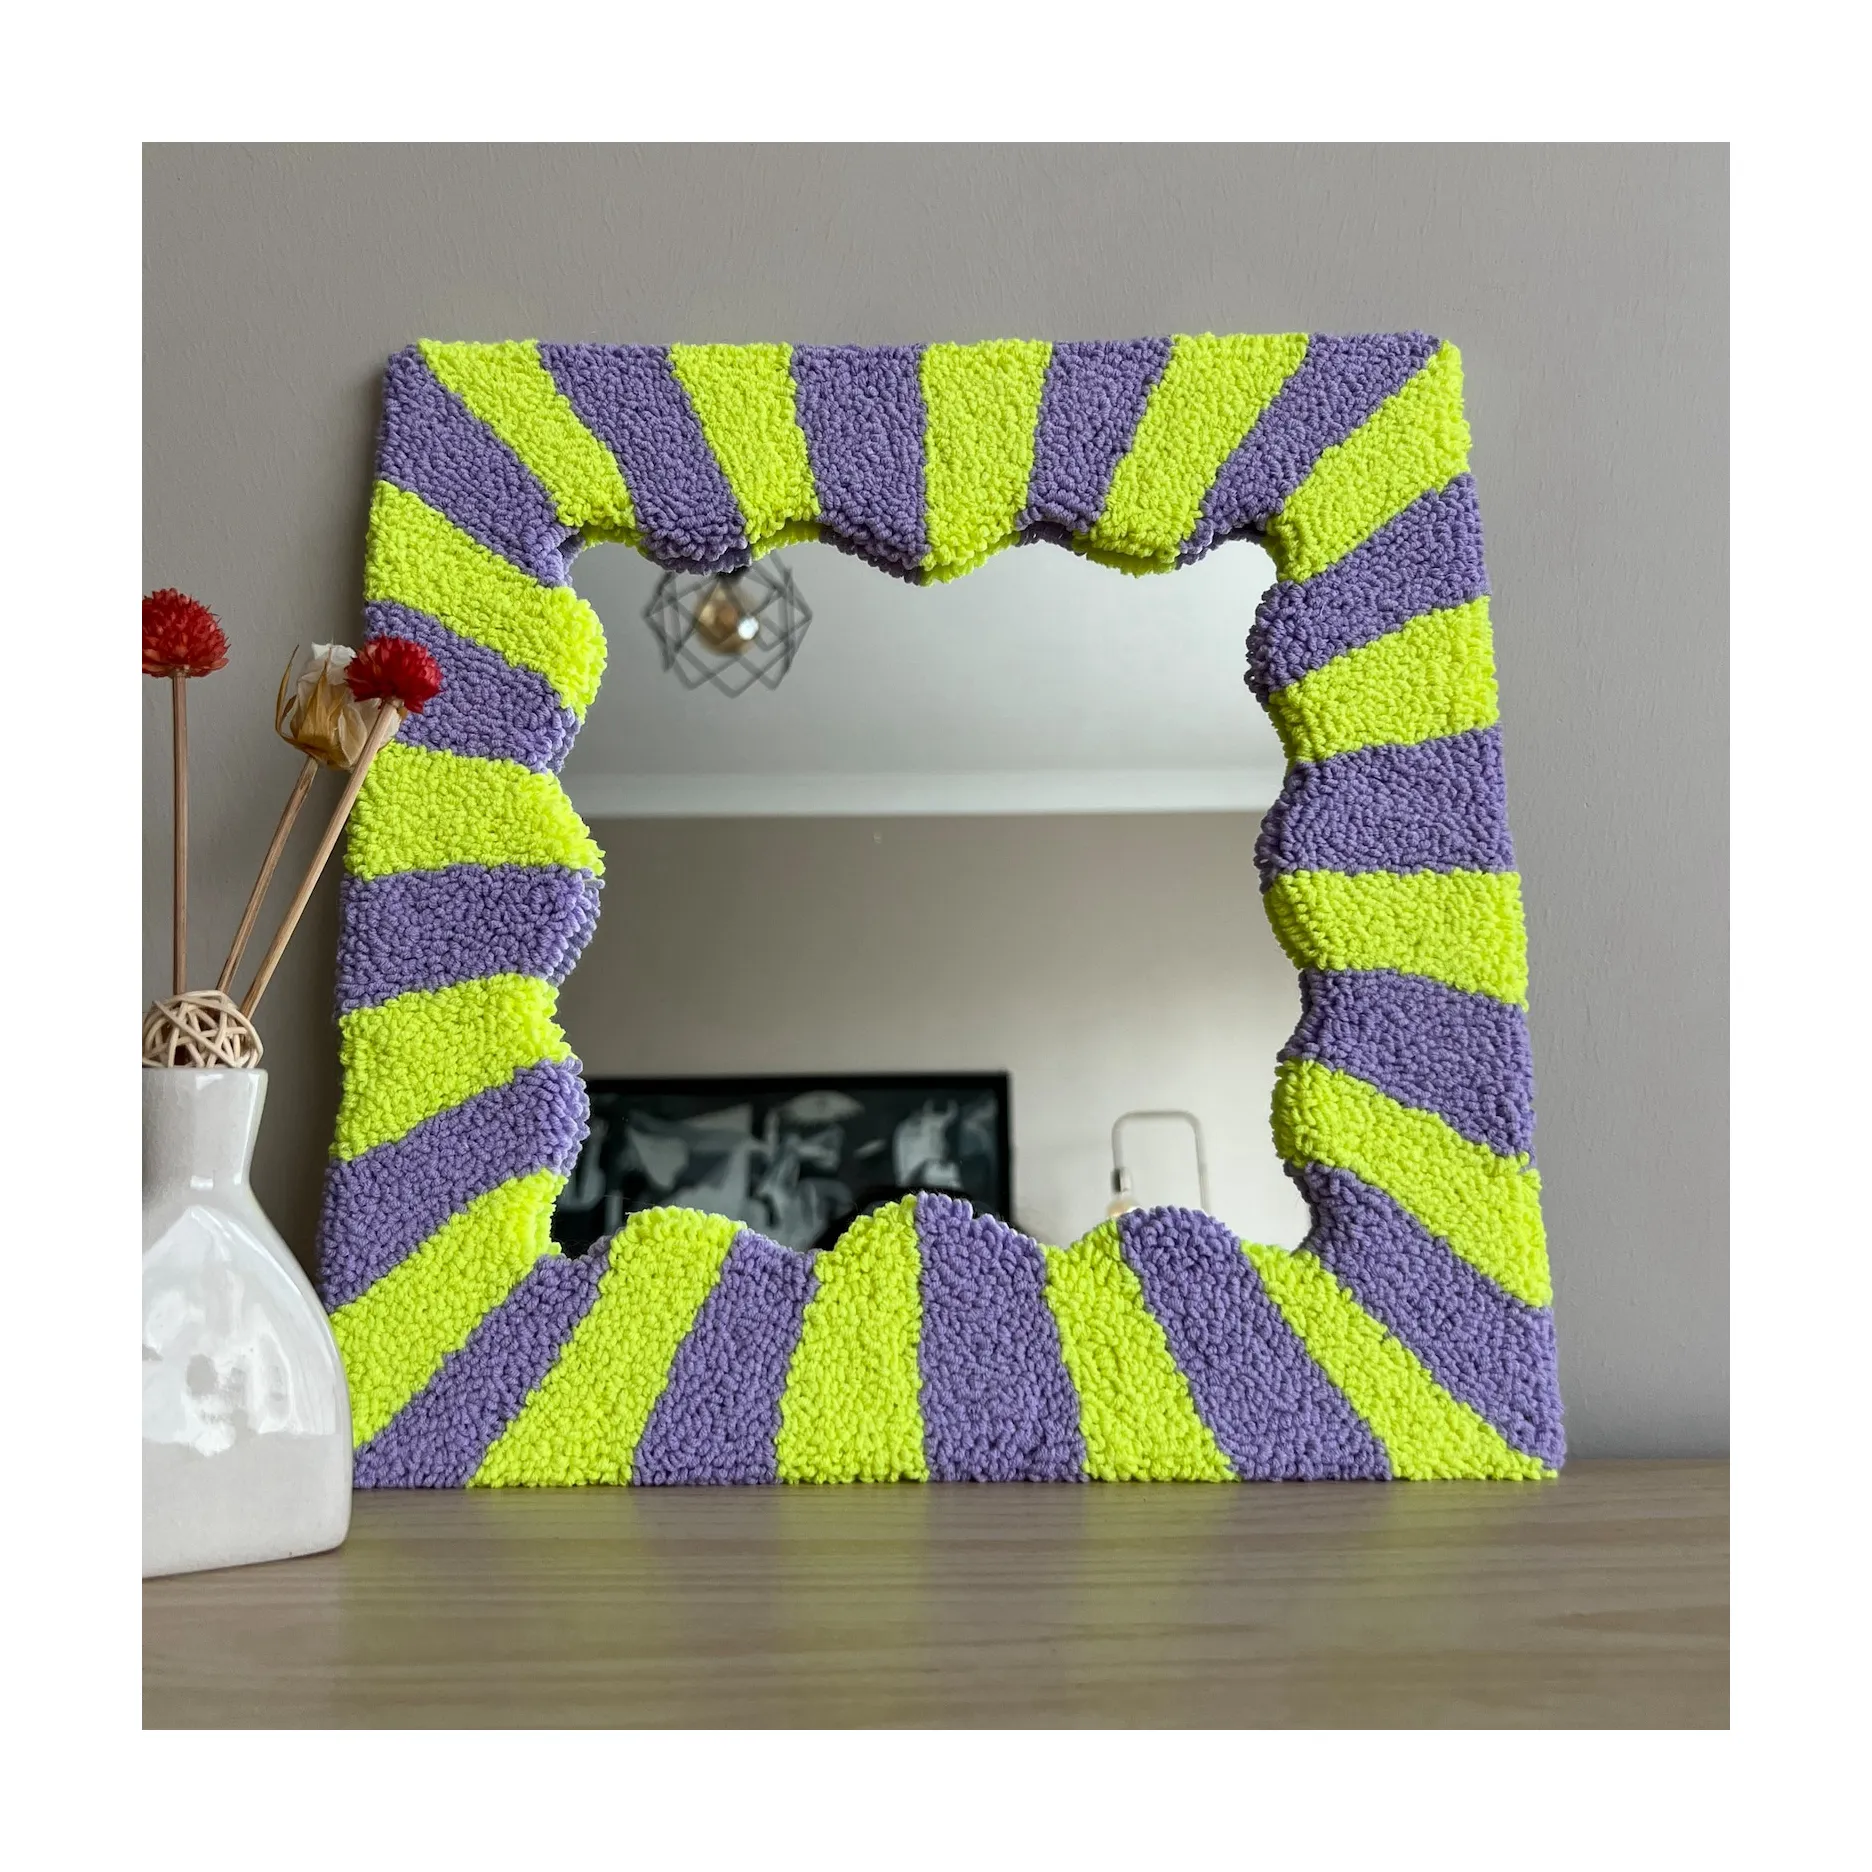 Cermin wajah kuning ungu desain dekoratif rumah cermin rias persegi berumbai buatan tangan